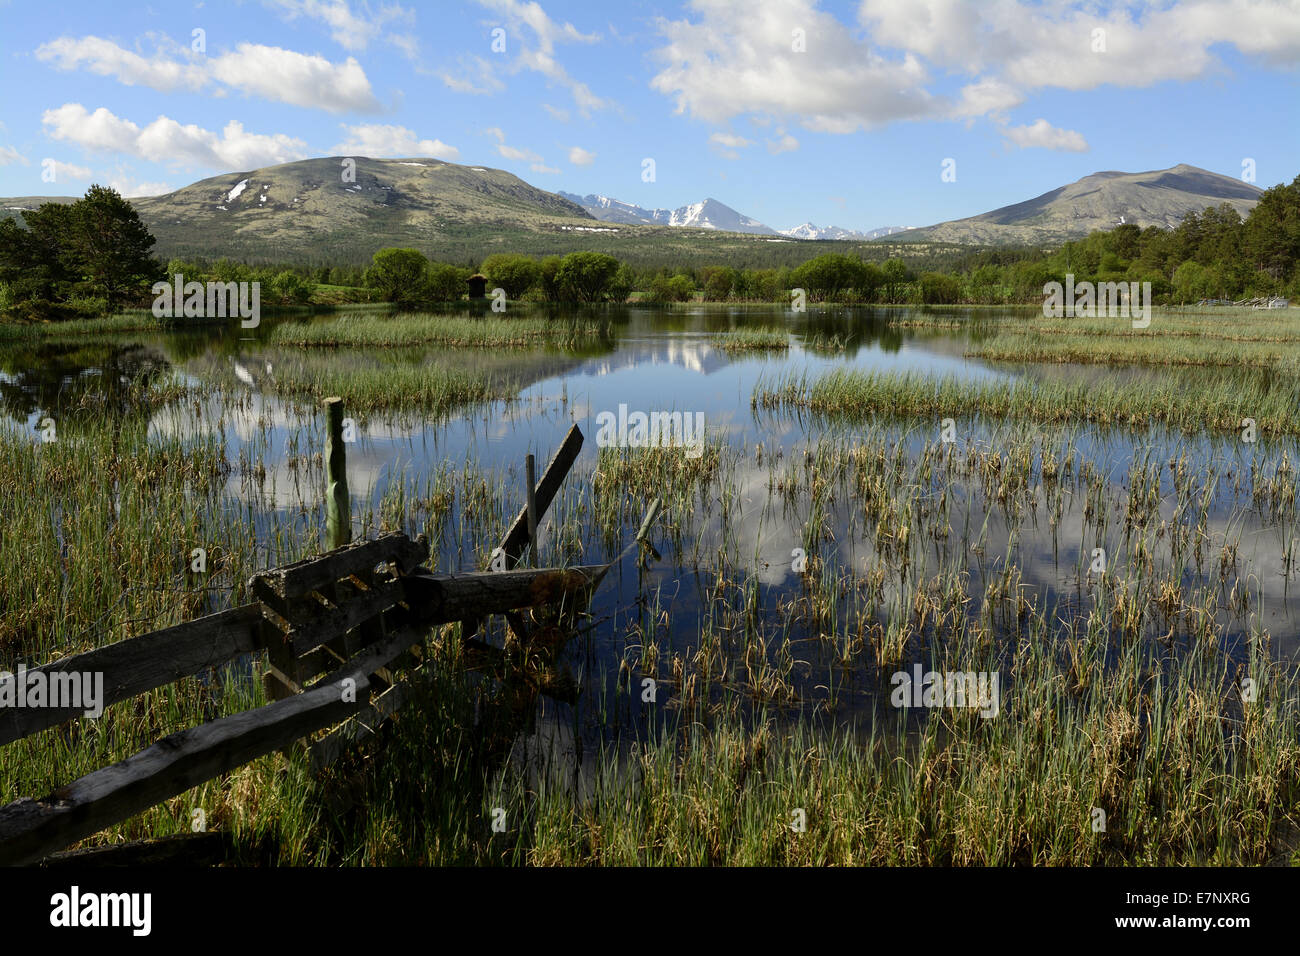 Lake, mountains, reflections, Holen, Folldal Kommune, Elgevosgho, Rondane National Park, Norway, Europe, Stock Photo